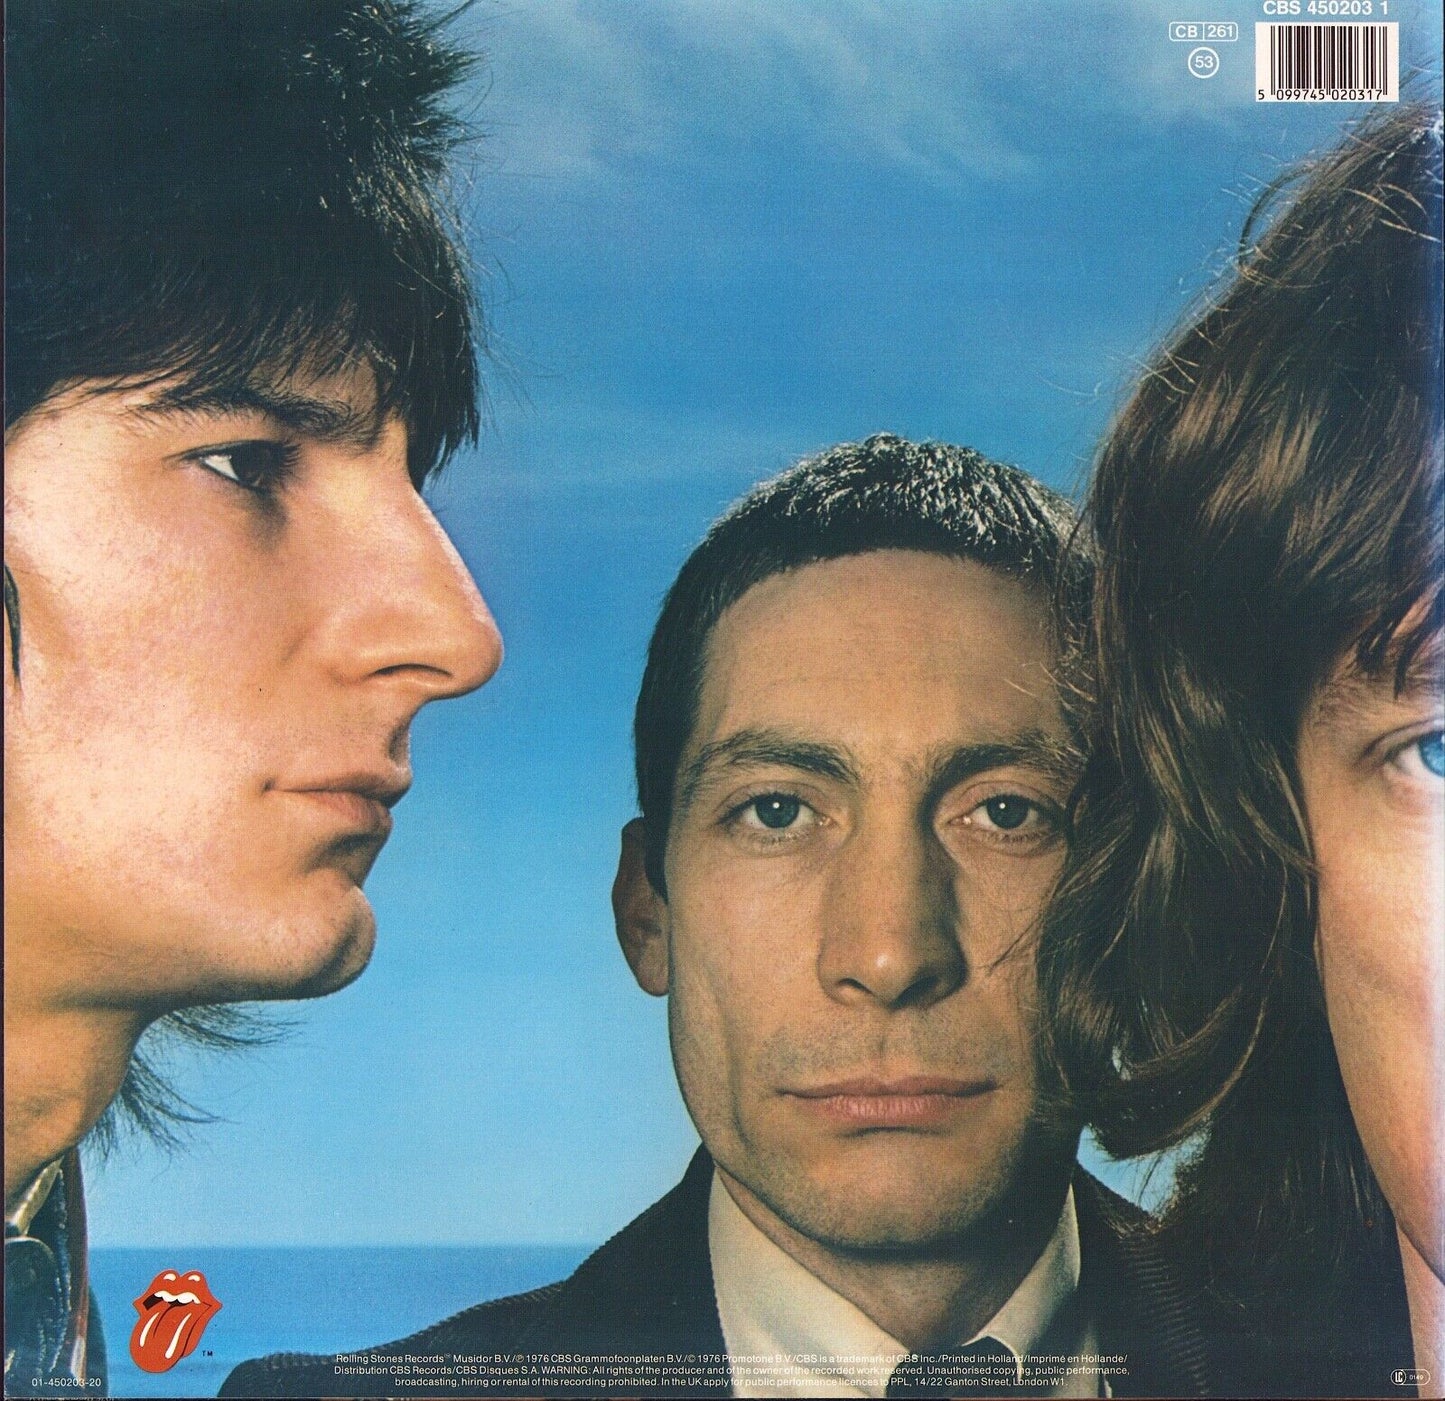 The Rolling Stones ‎- Black and Blue Vinyl LP